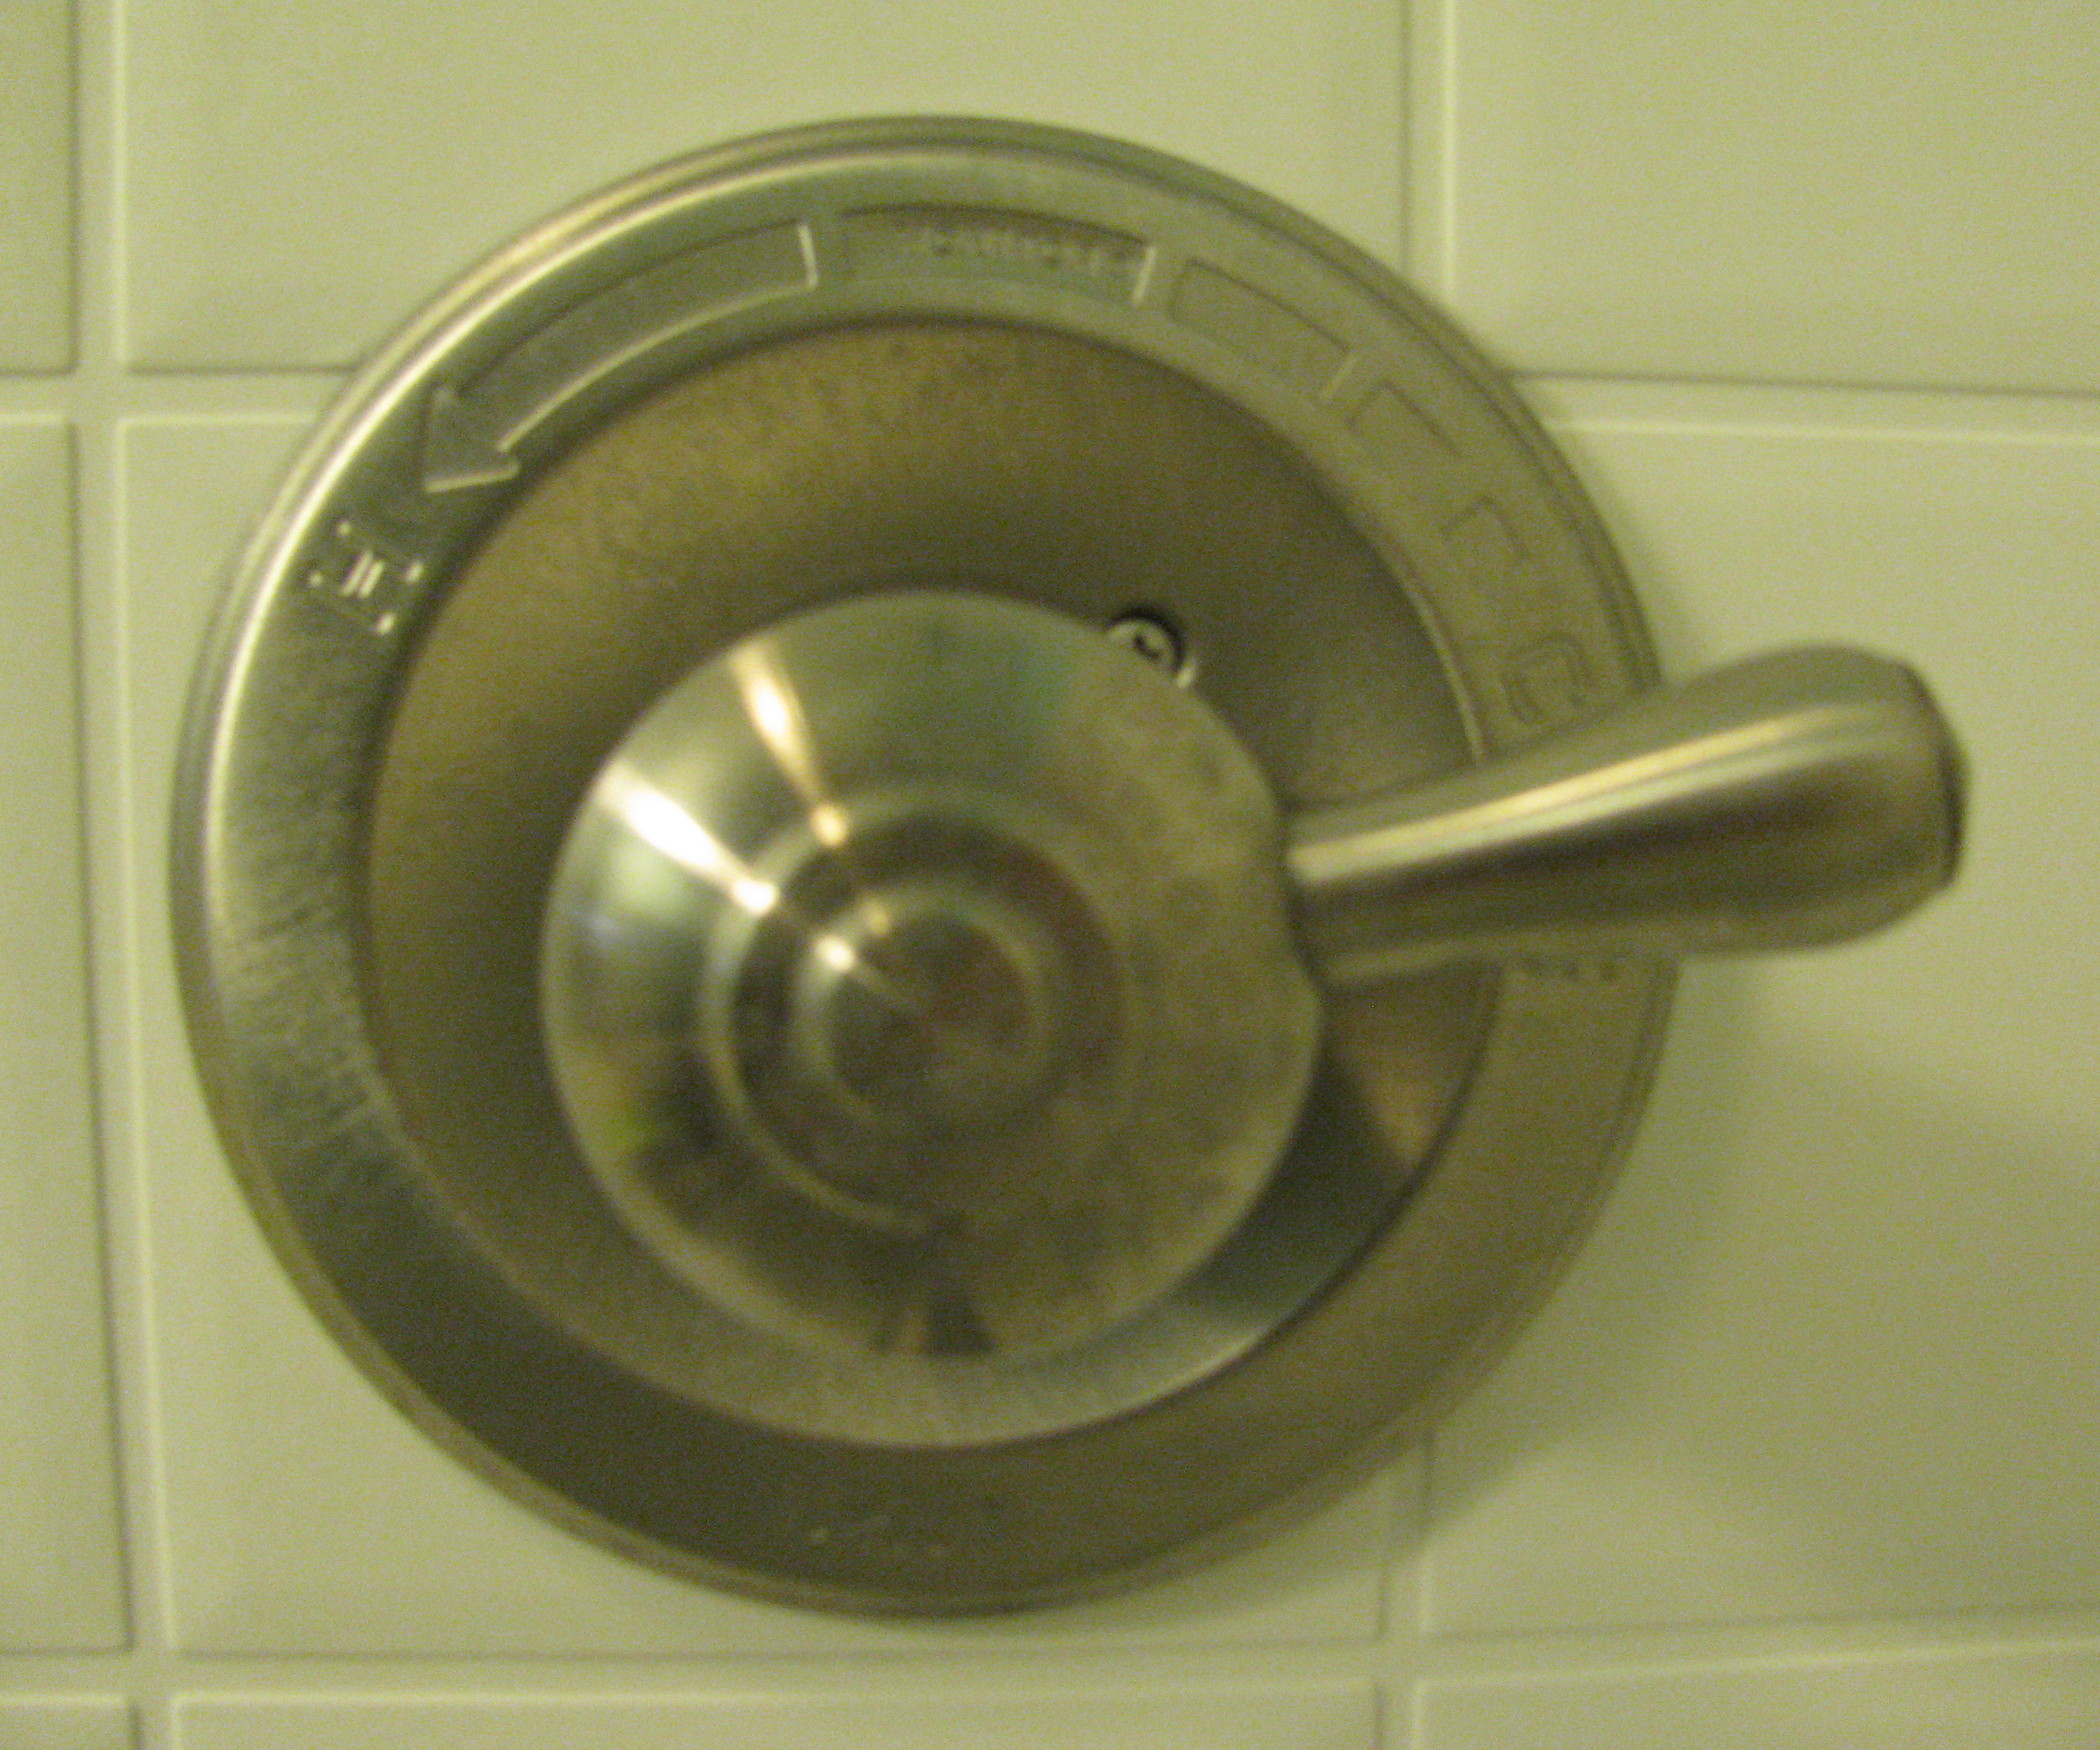 Delta Single Handle Shower Faucet Repair Diagram Delta Shower Faucet Repair Instructions Wallpaper Home